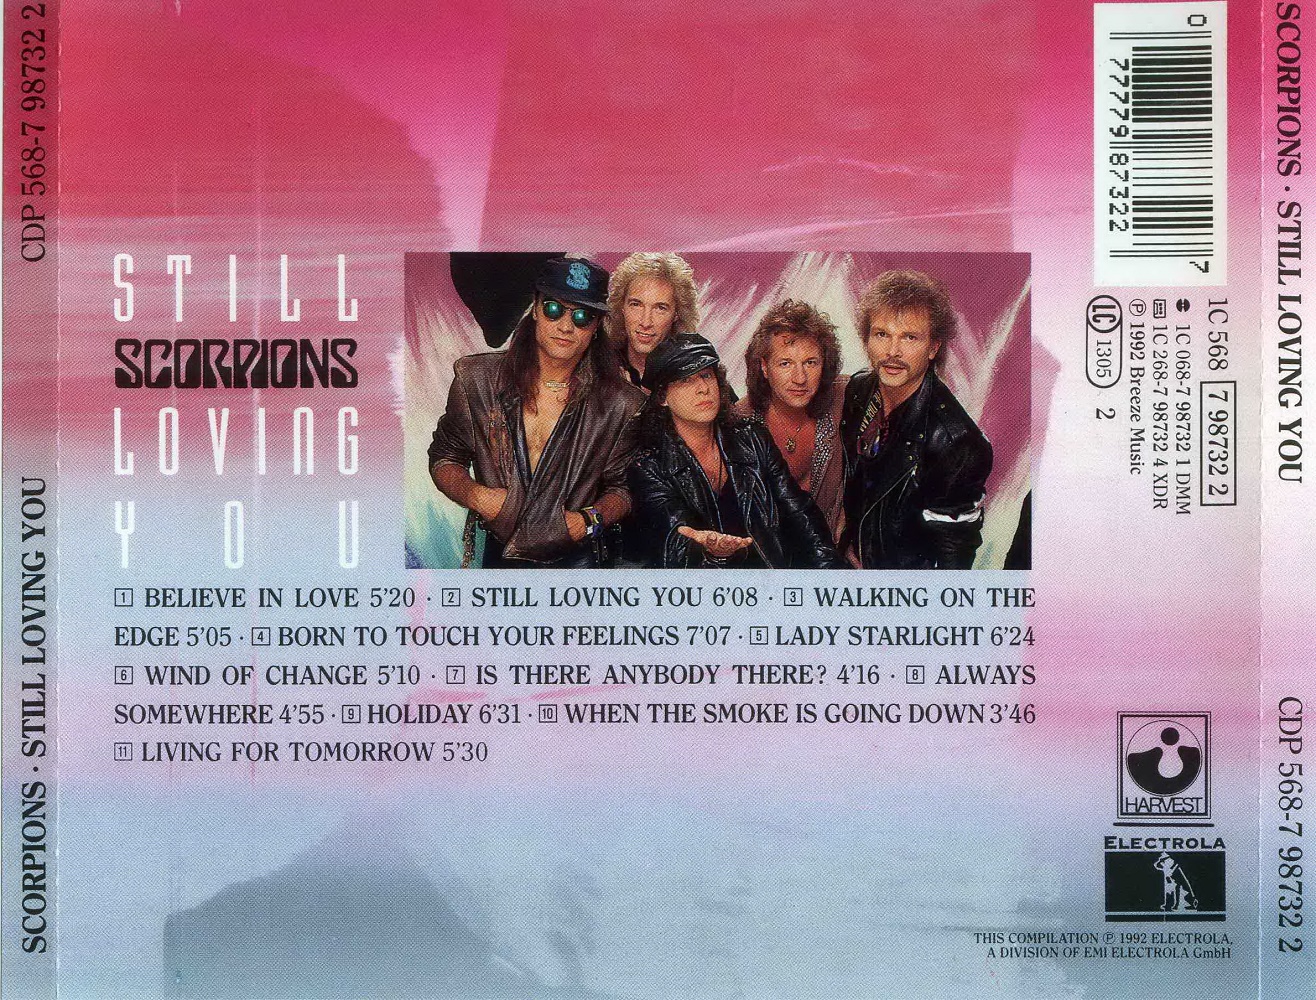 L still loving you. Scorpions альбом 1992. Скорпионс стил ловинг. Scorpions "still loving you" 1992 обложка. Scorpions 1977.